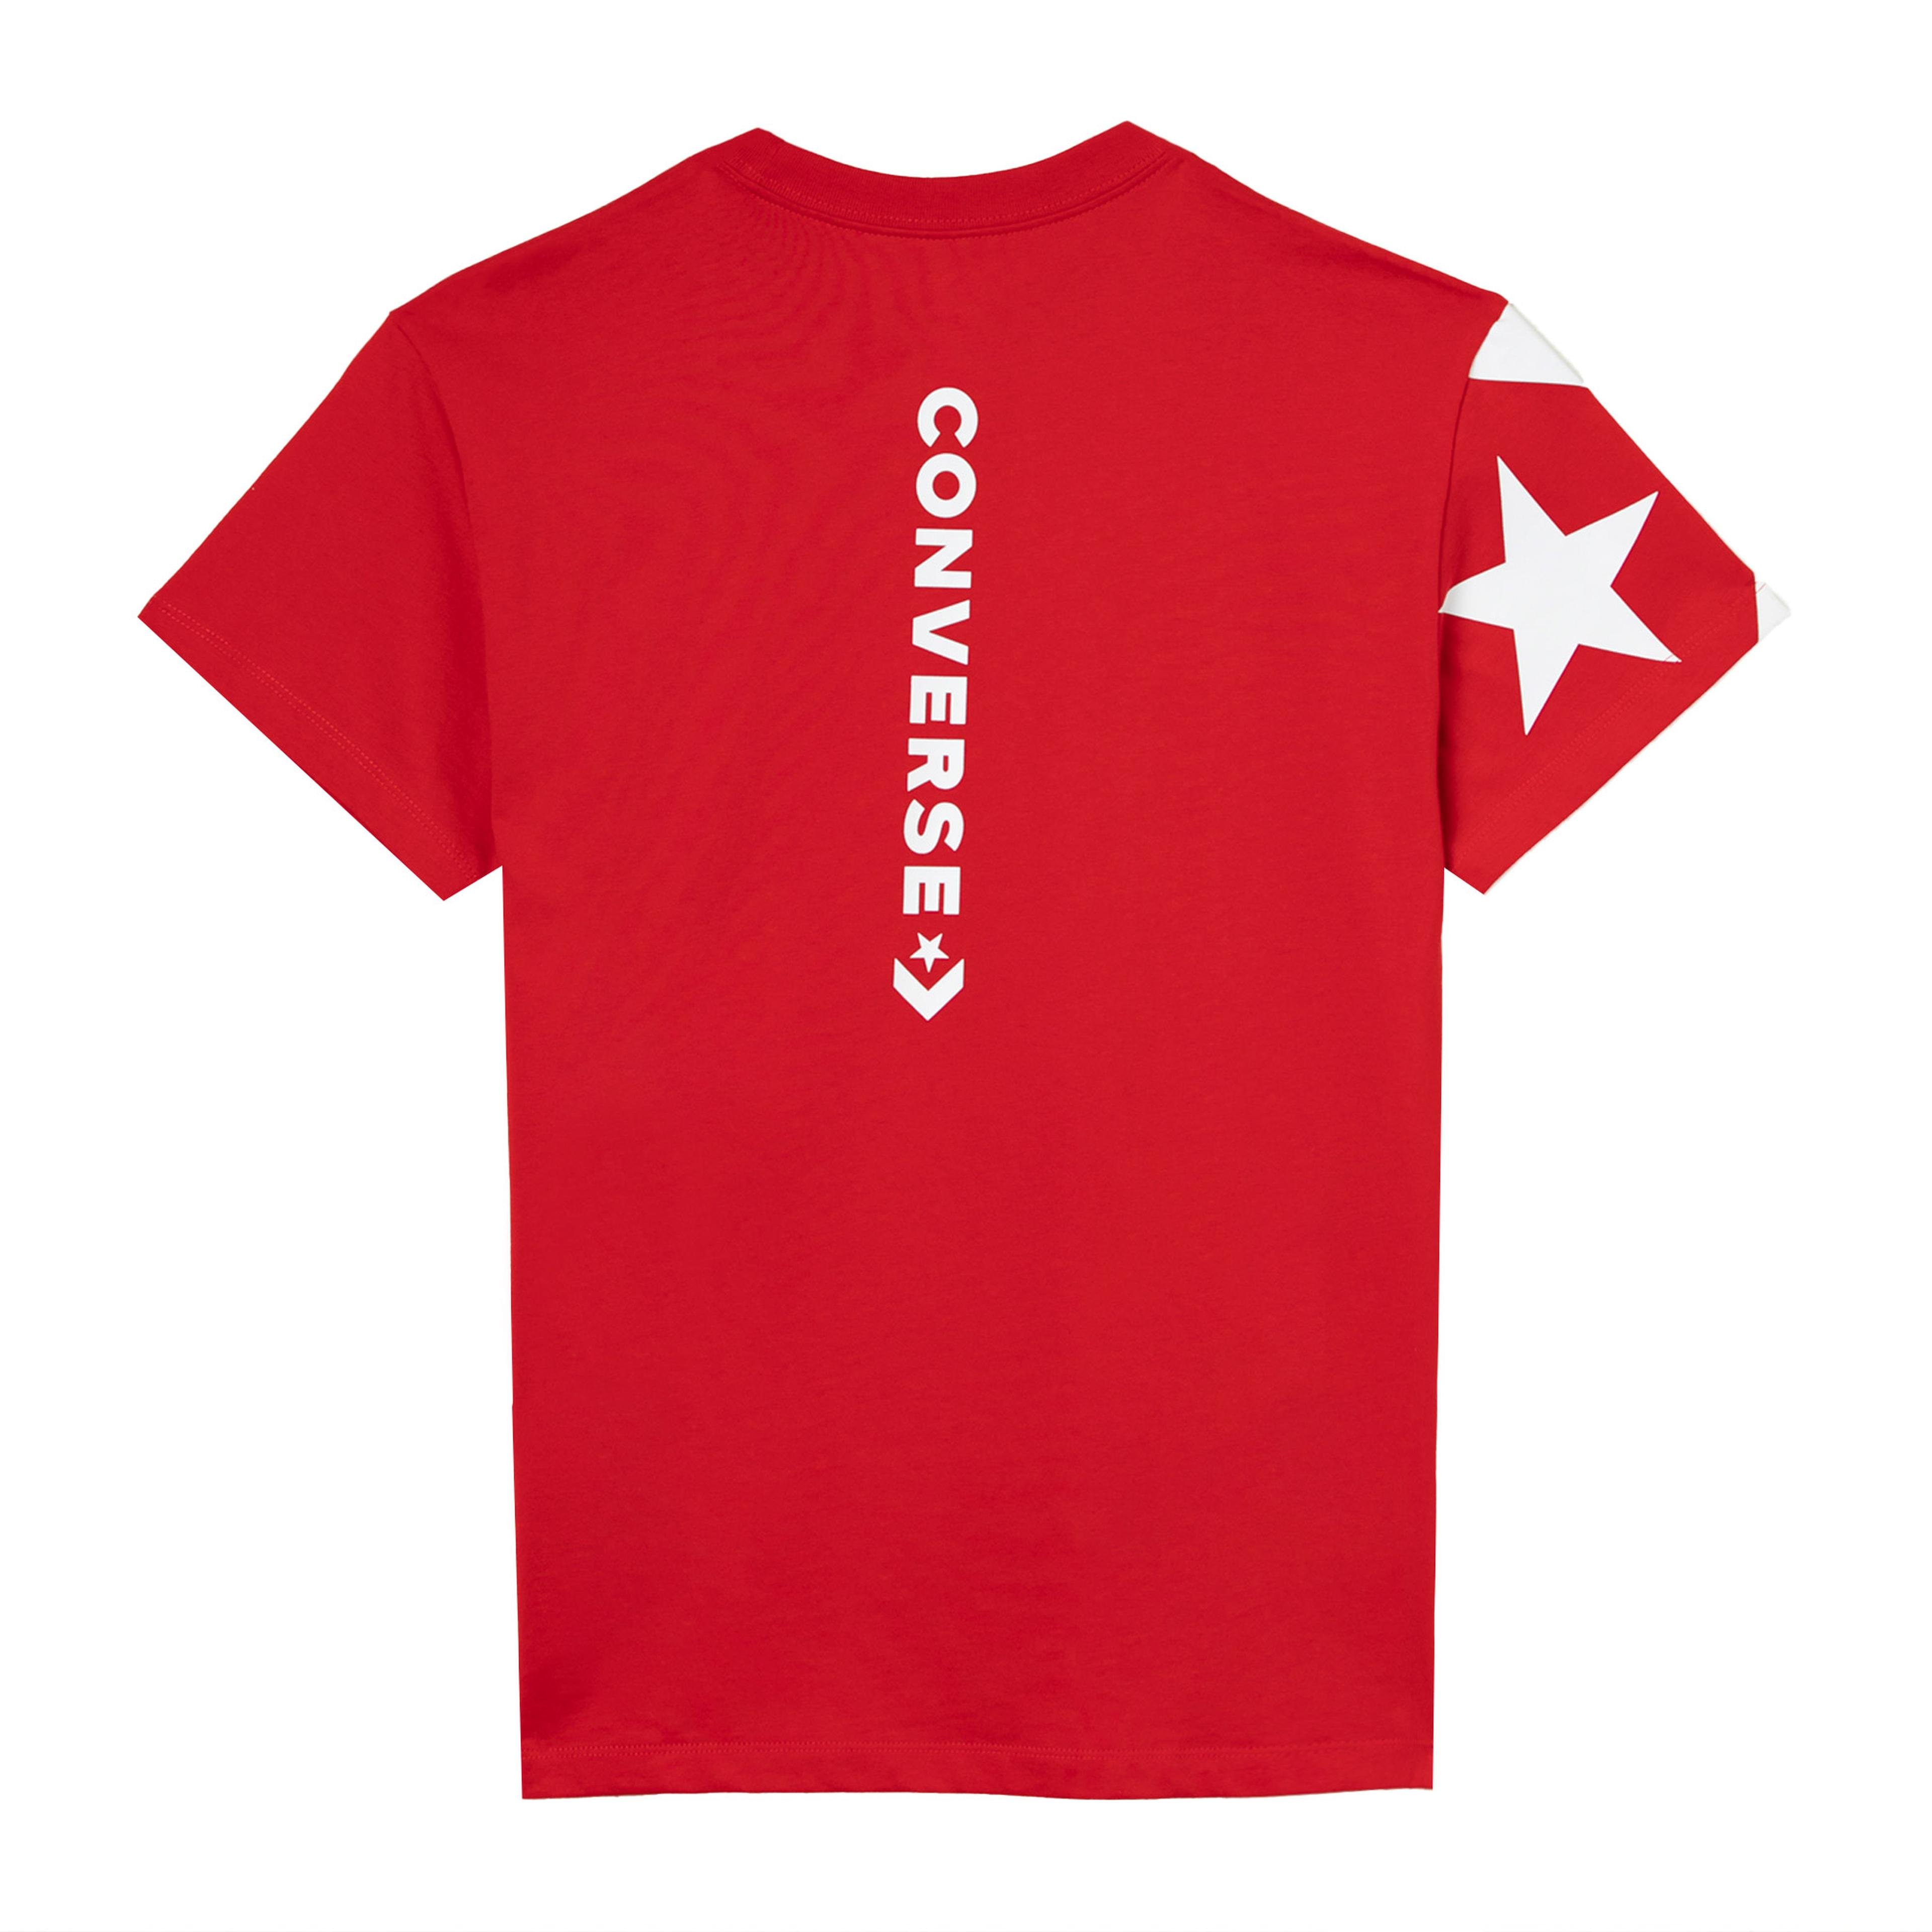 Converse Star Chevron Triple Hit Relaxed Kadın Kırmızı T-Shirt